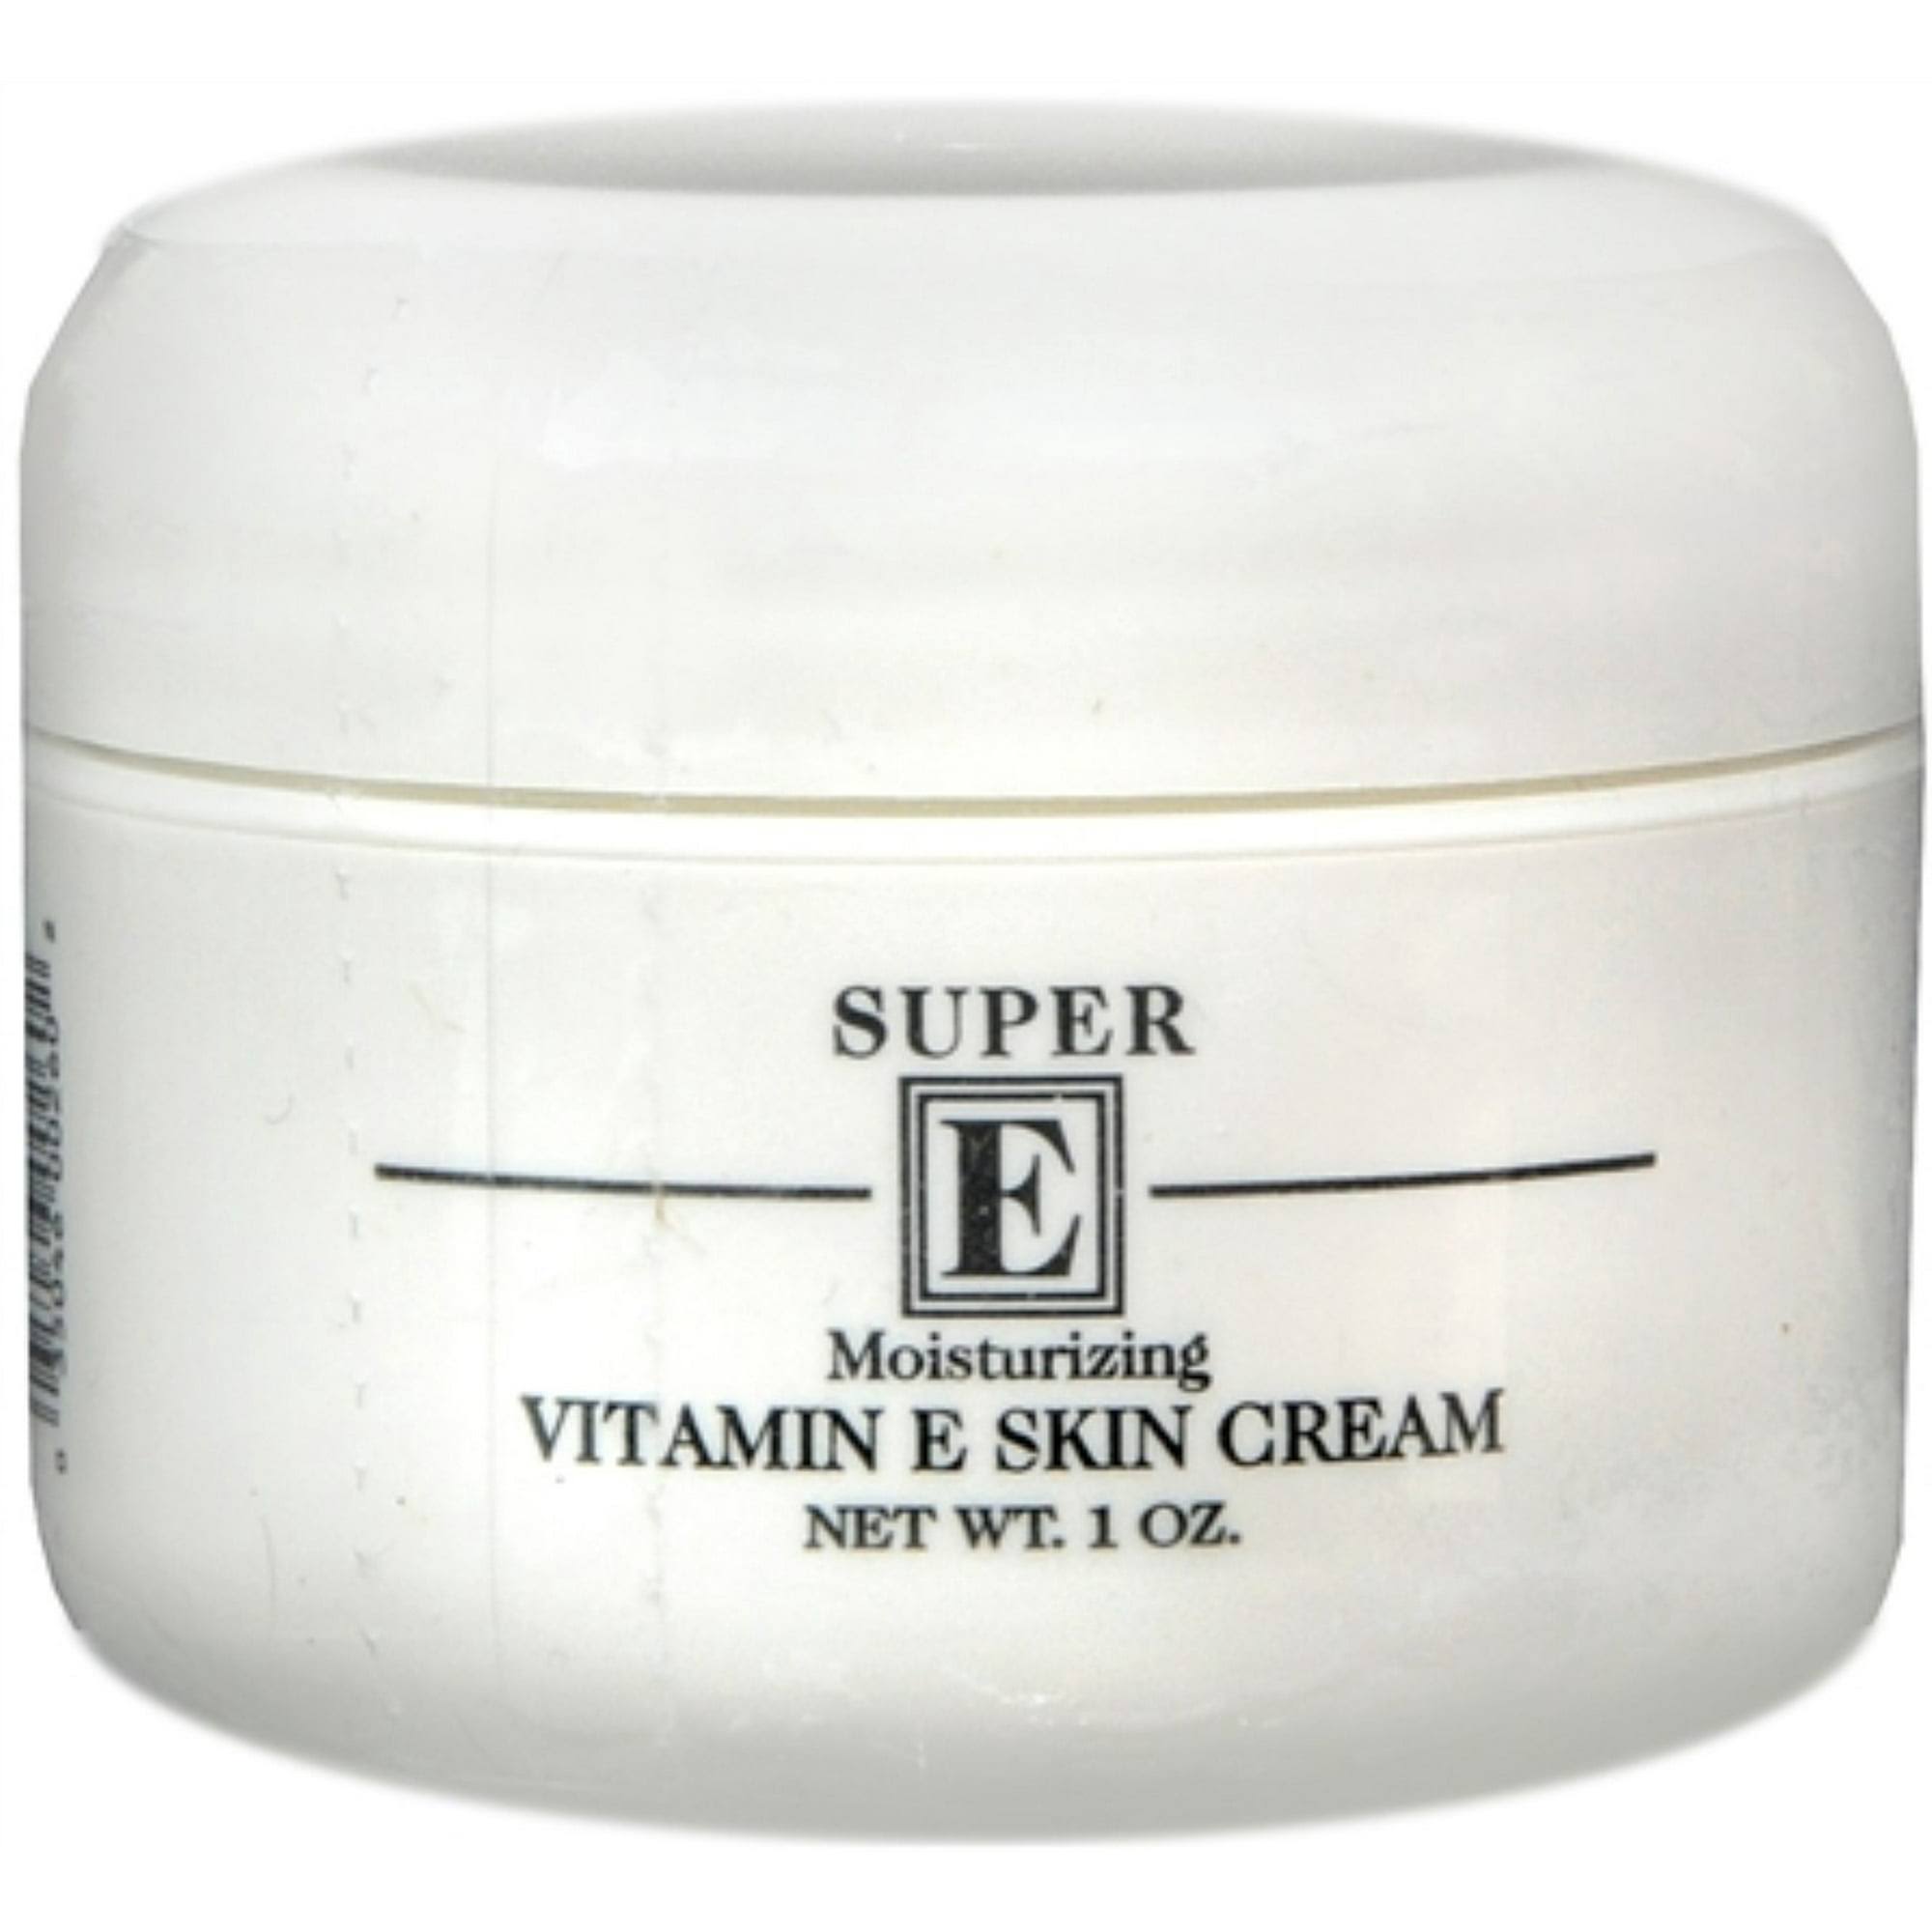 Windmill Super E Moisturizing Vitamin E Skin Cream